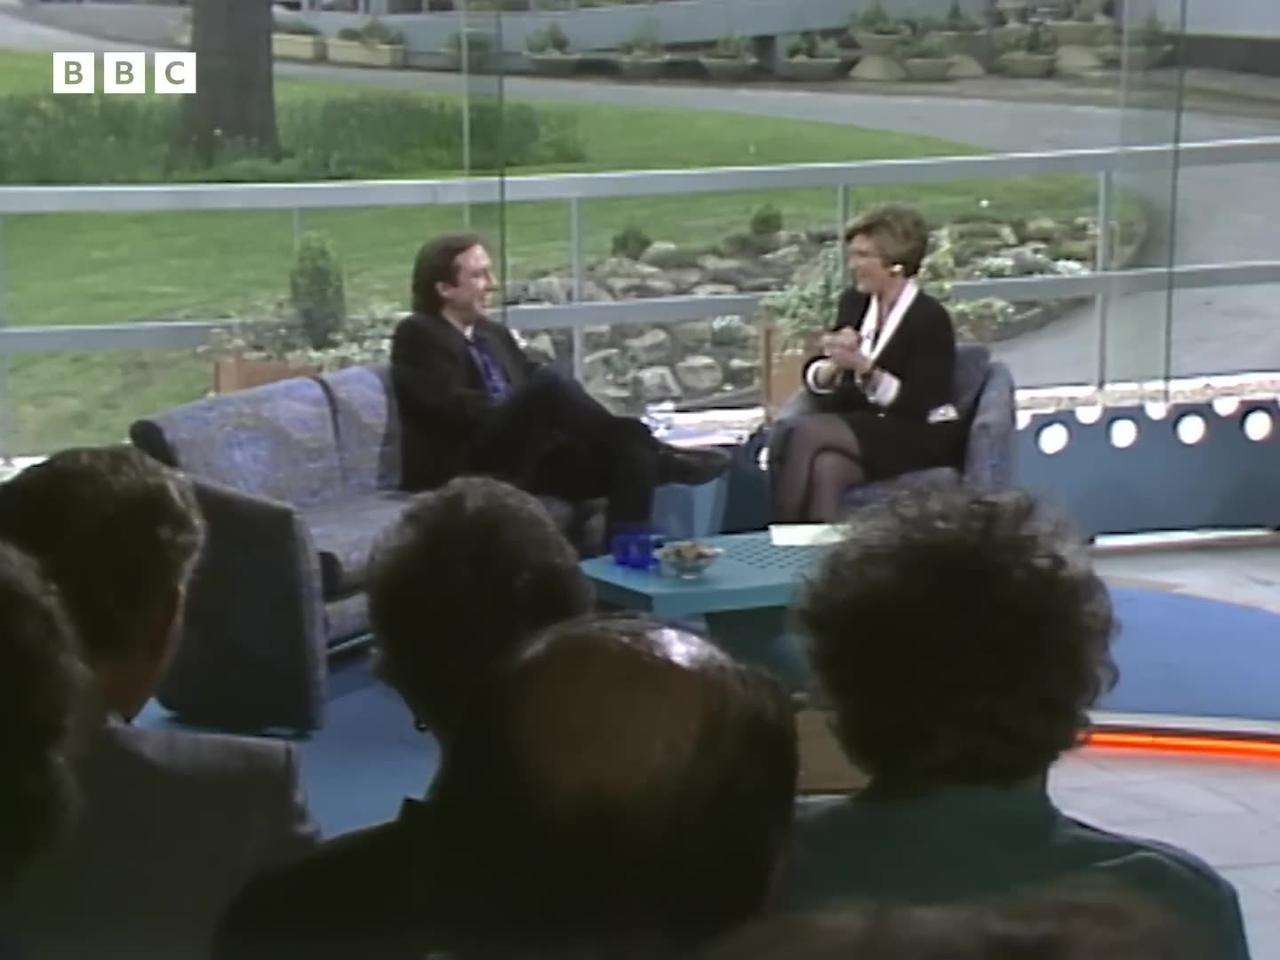 Bill Hicks on Satan, Peace & Family [BBC Interview 1992]